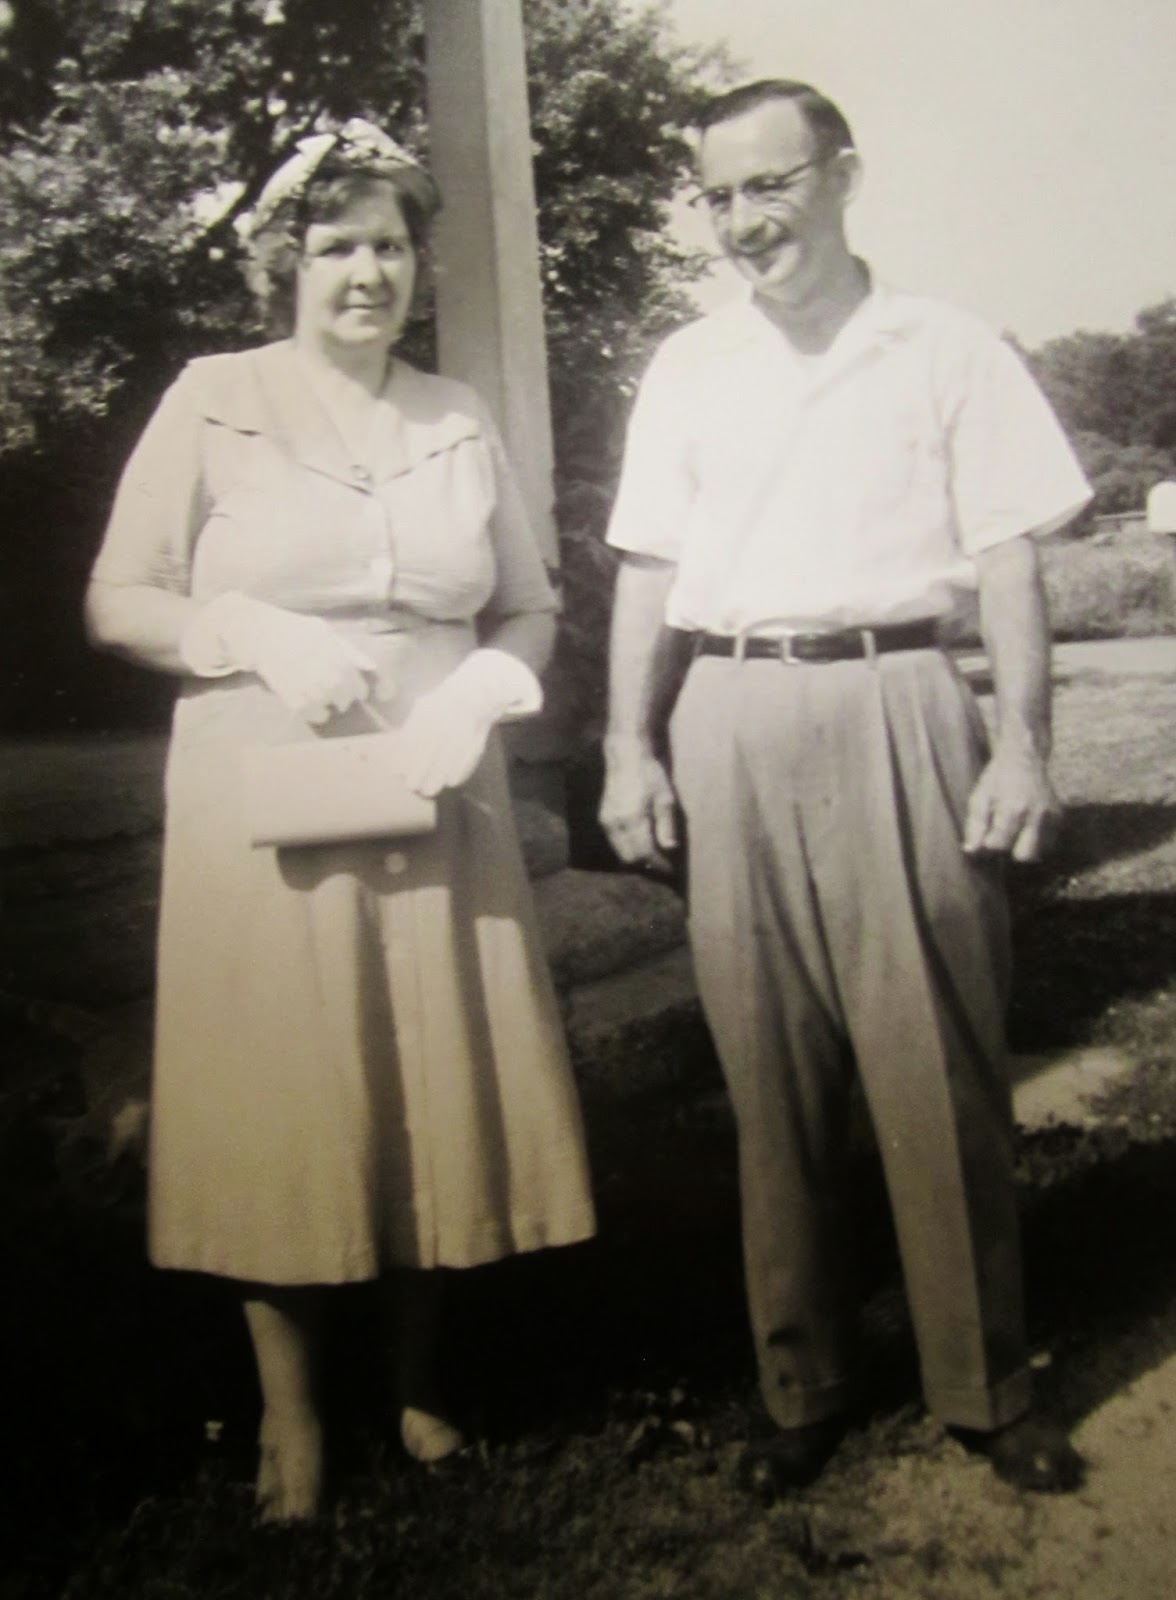 Climbing My Family Tree: Anna Mae (Bennett) & Owen "Carl" Henn - early to mid 1950's